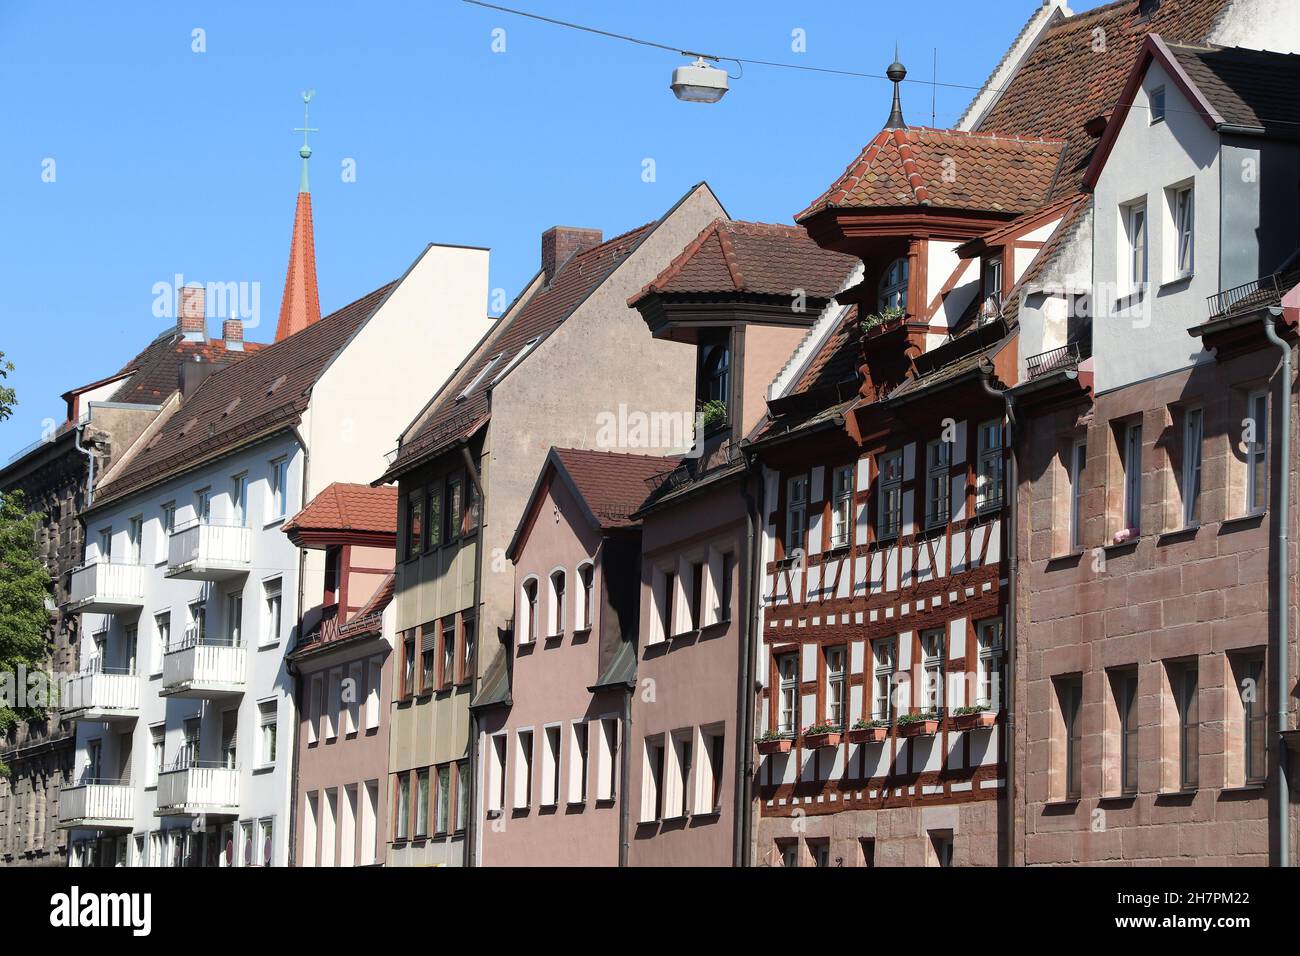 Nuremberg Germany - German landmark. Street view of European architecture. Stock Photo